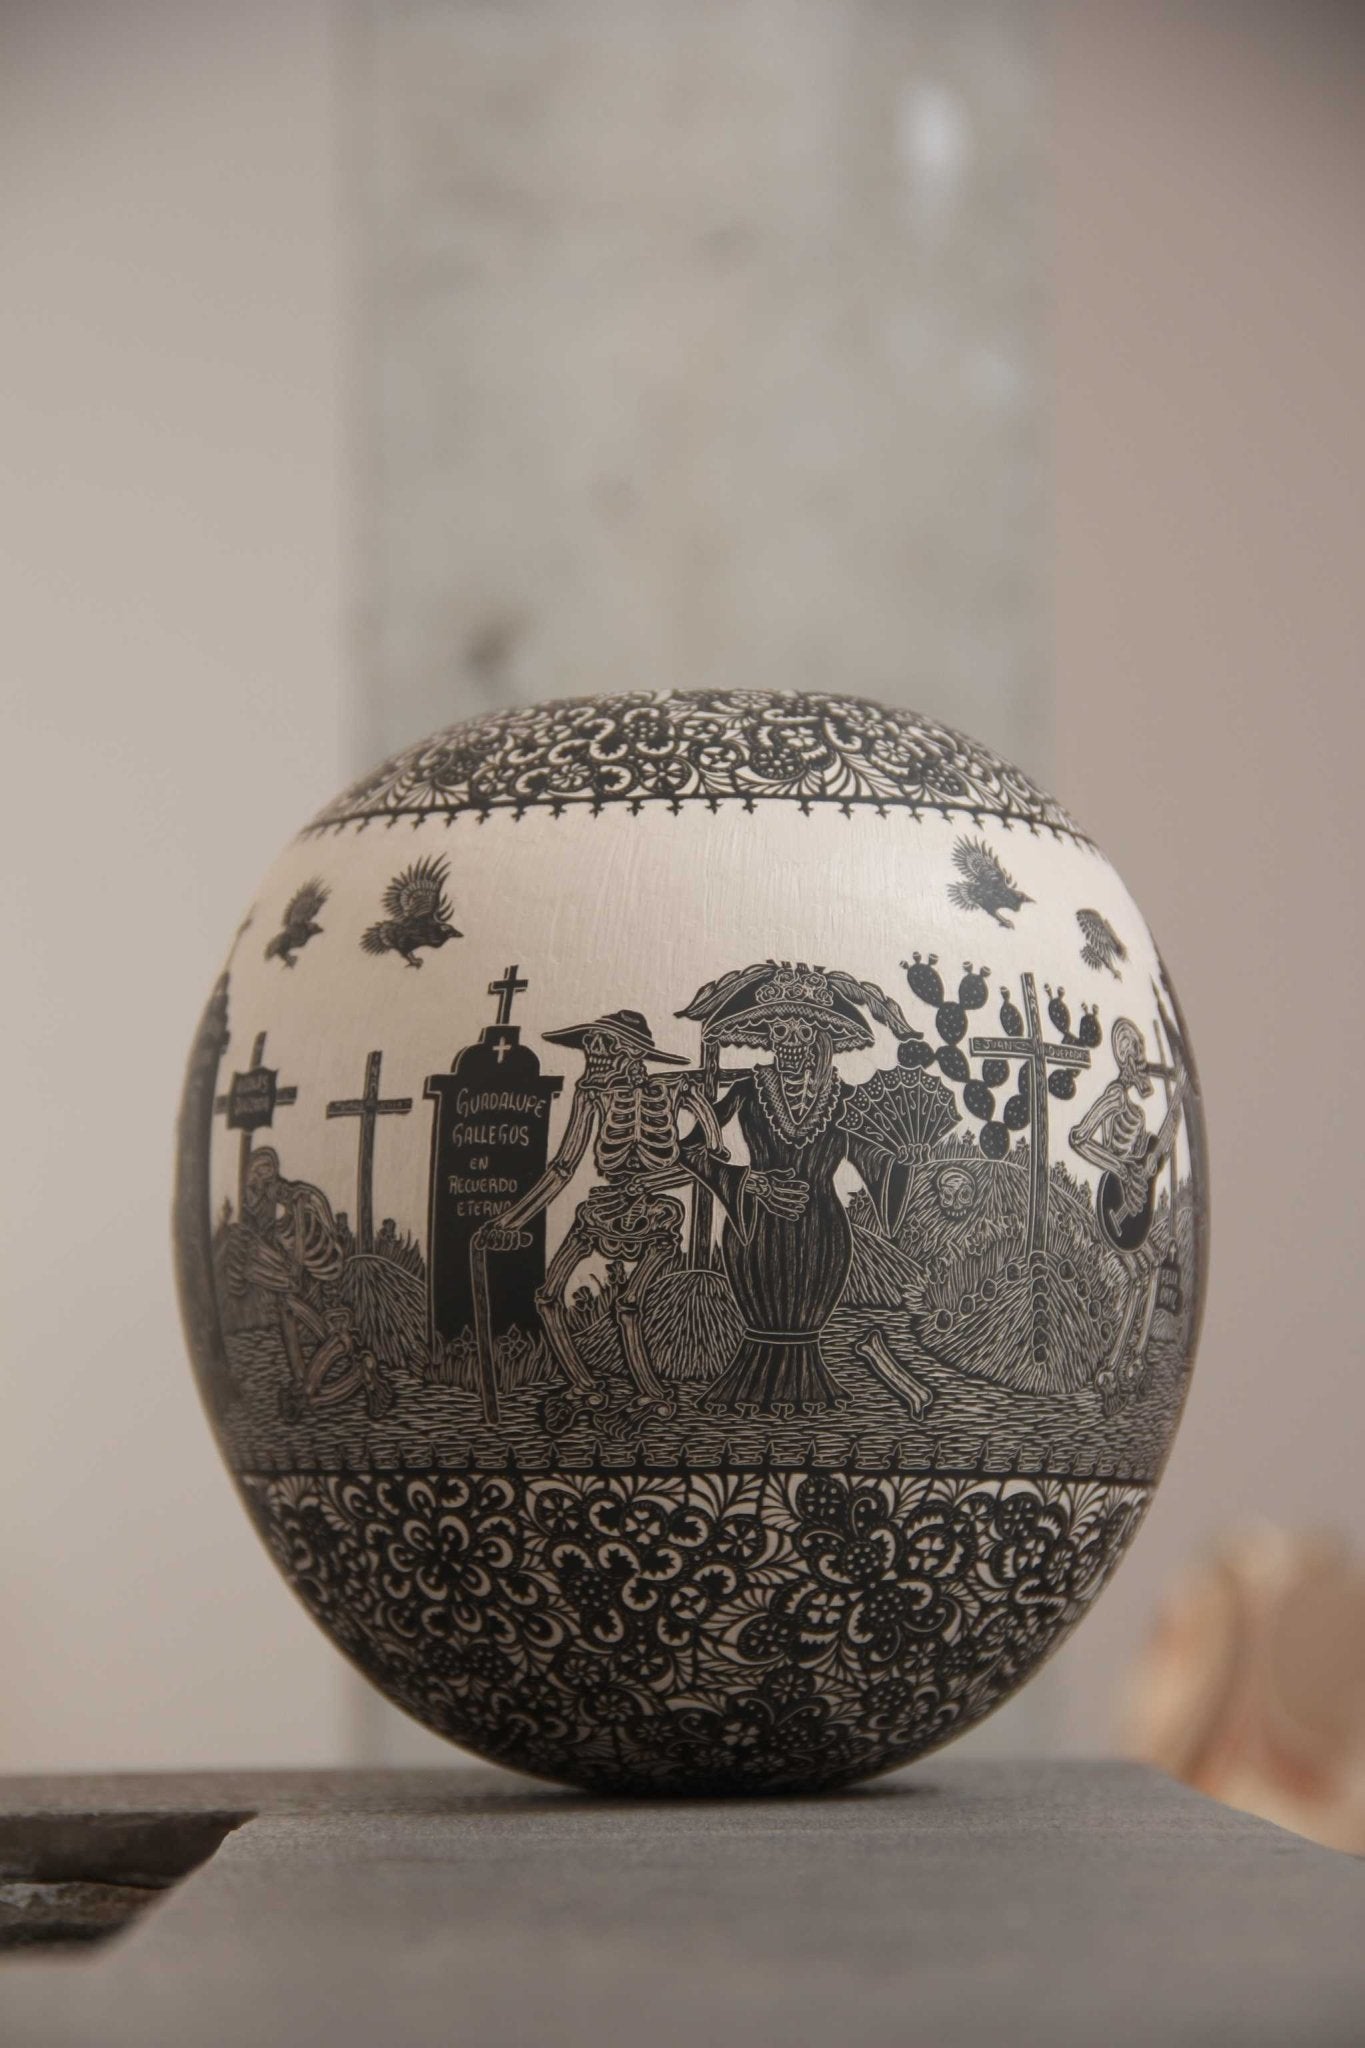 Mata Ortiz Ceramics - Repose en paix - Jour - Art Huichol - Marakame